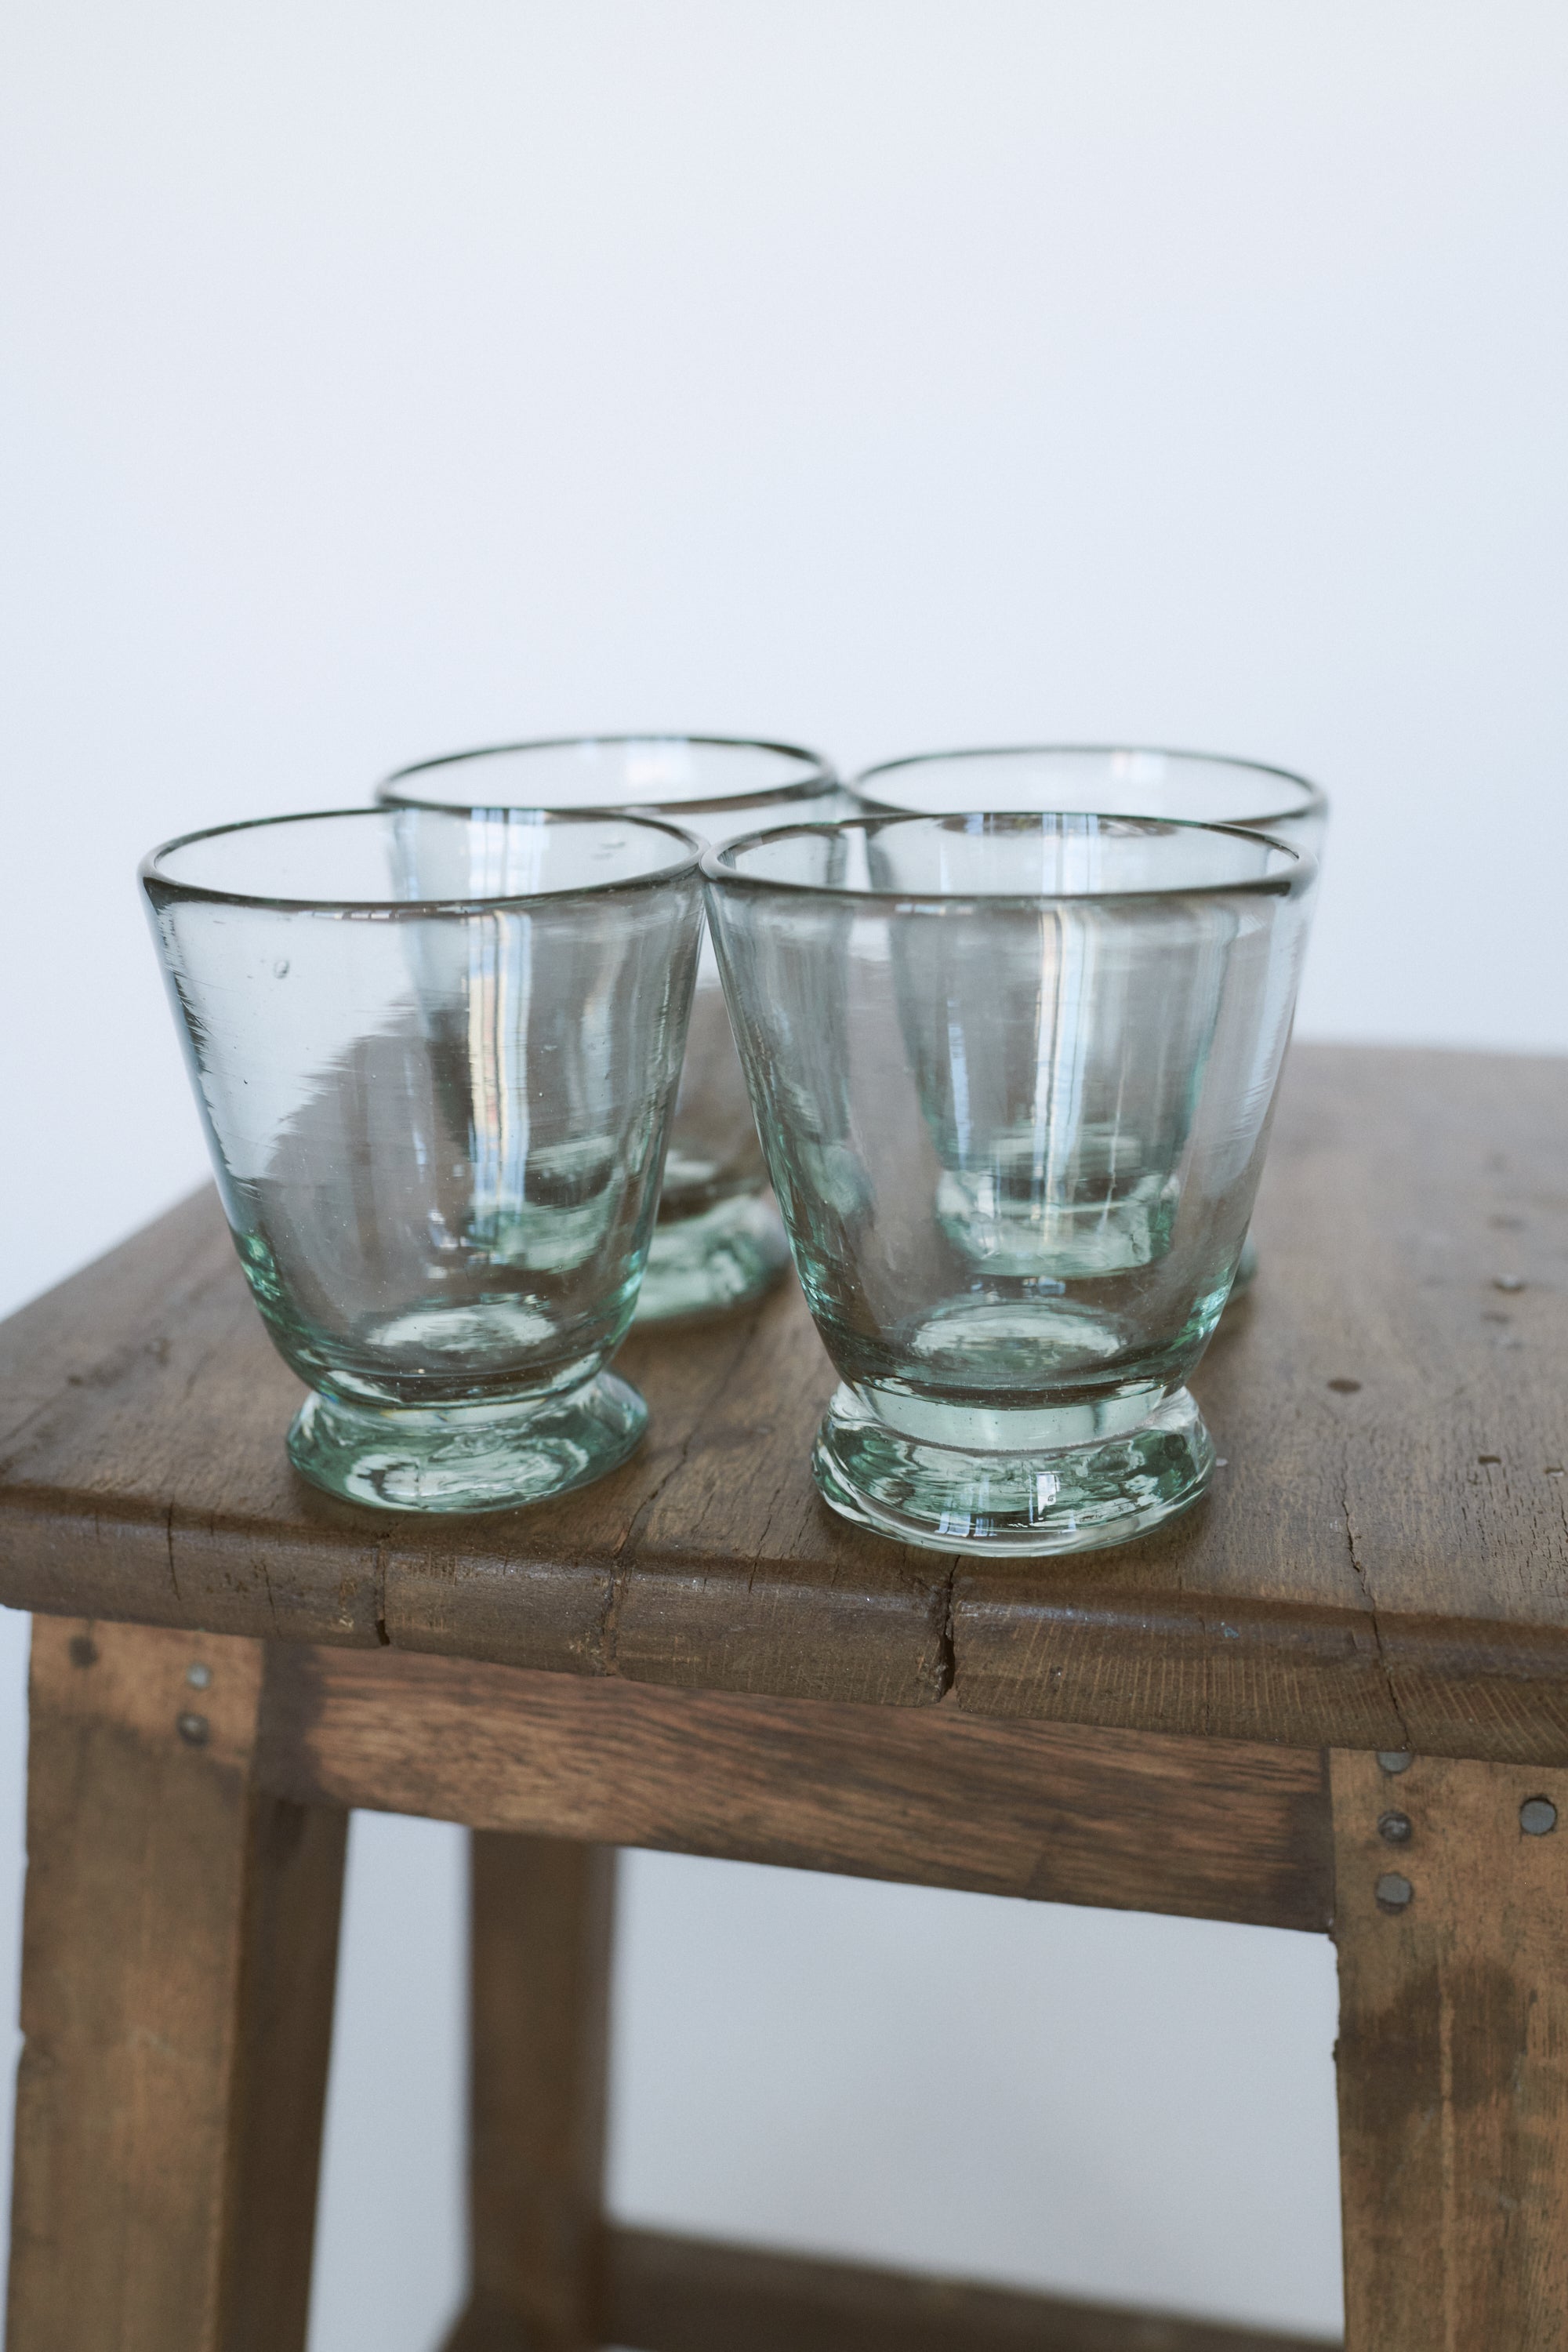 Øgaard Hand Blown Glass Cup - Desert Vintage